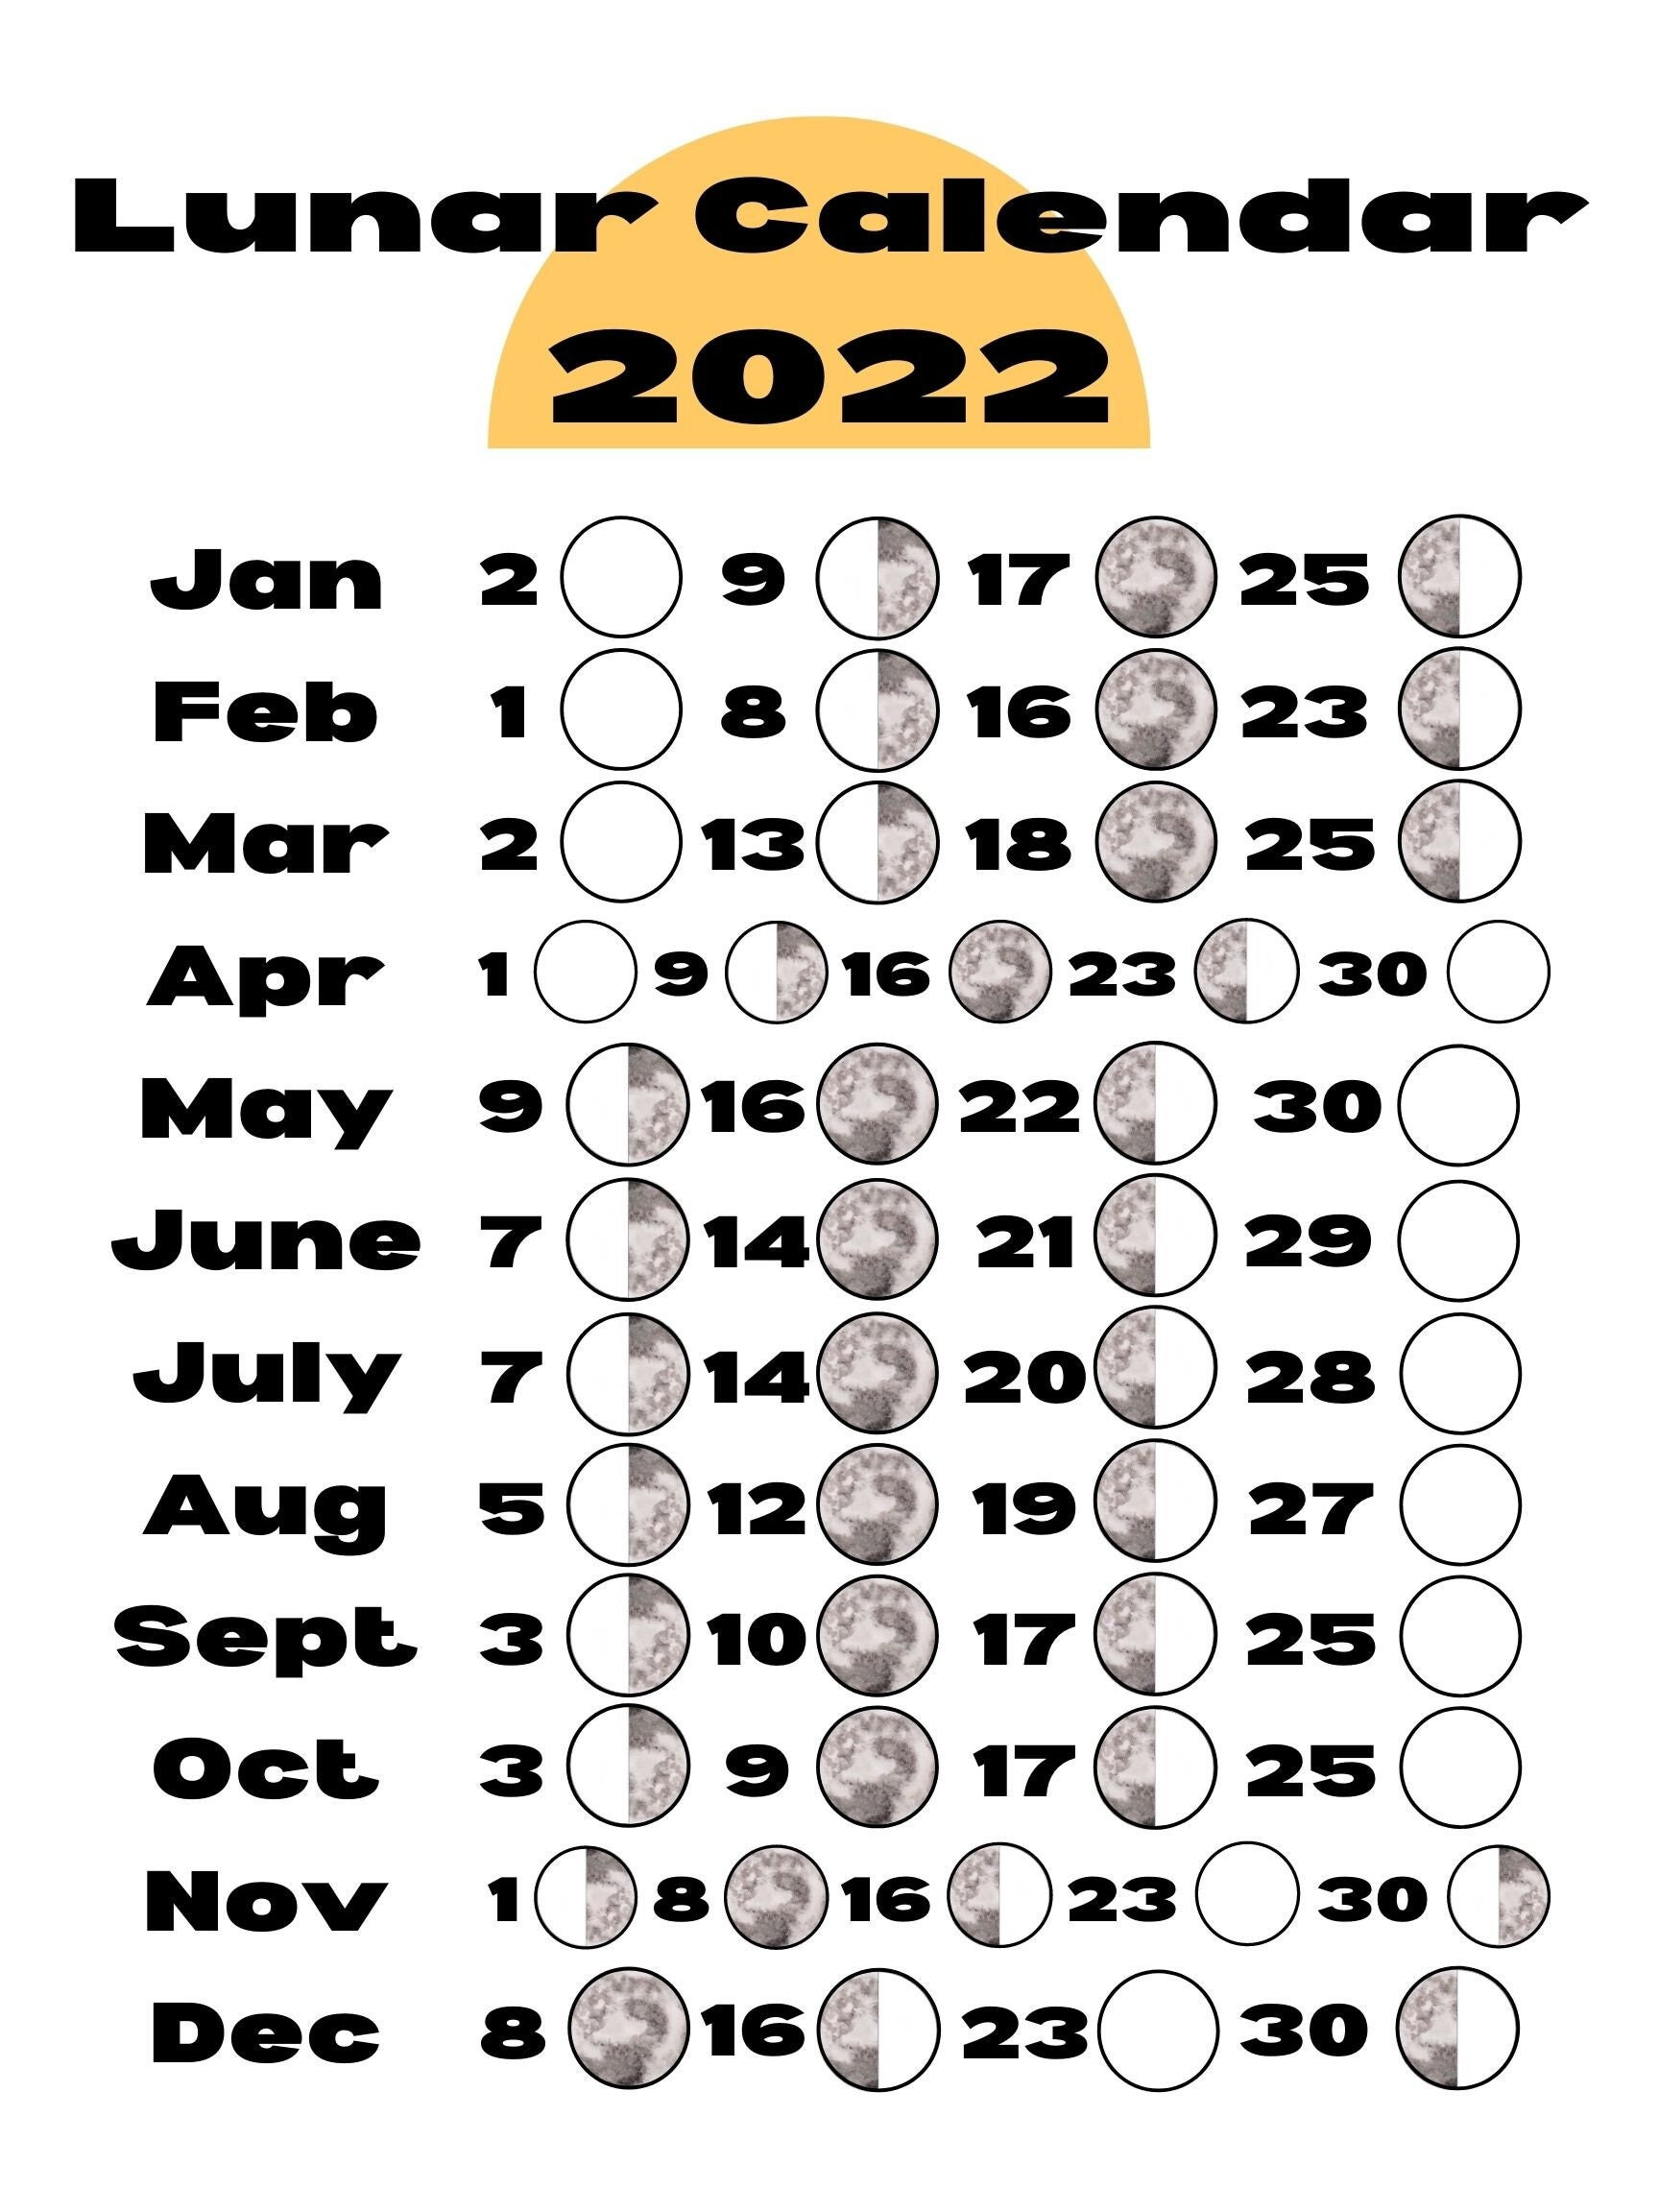 Lunar Calendar 2022 Instant Download | Etsy  Lunar Calendar 2022 Perth